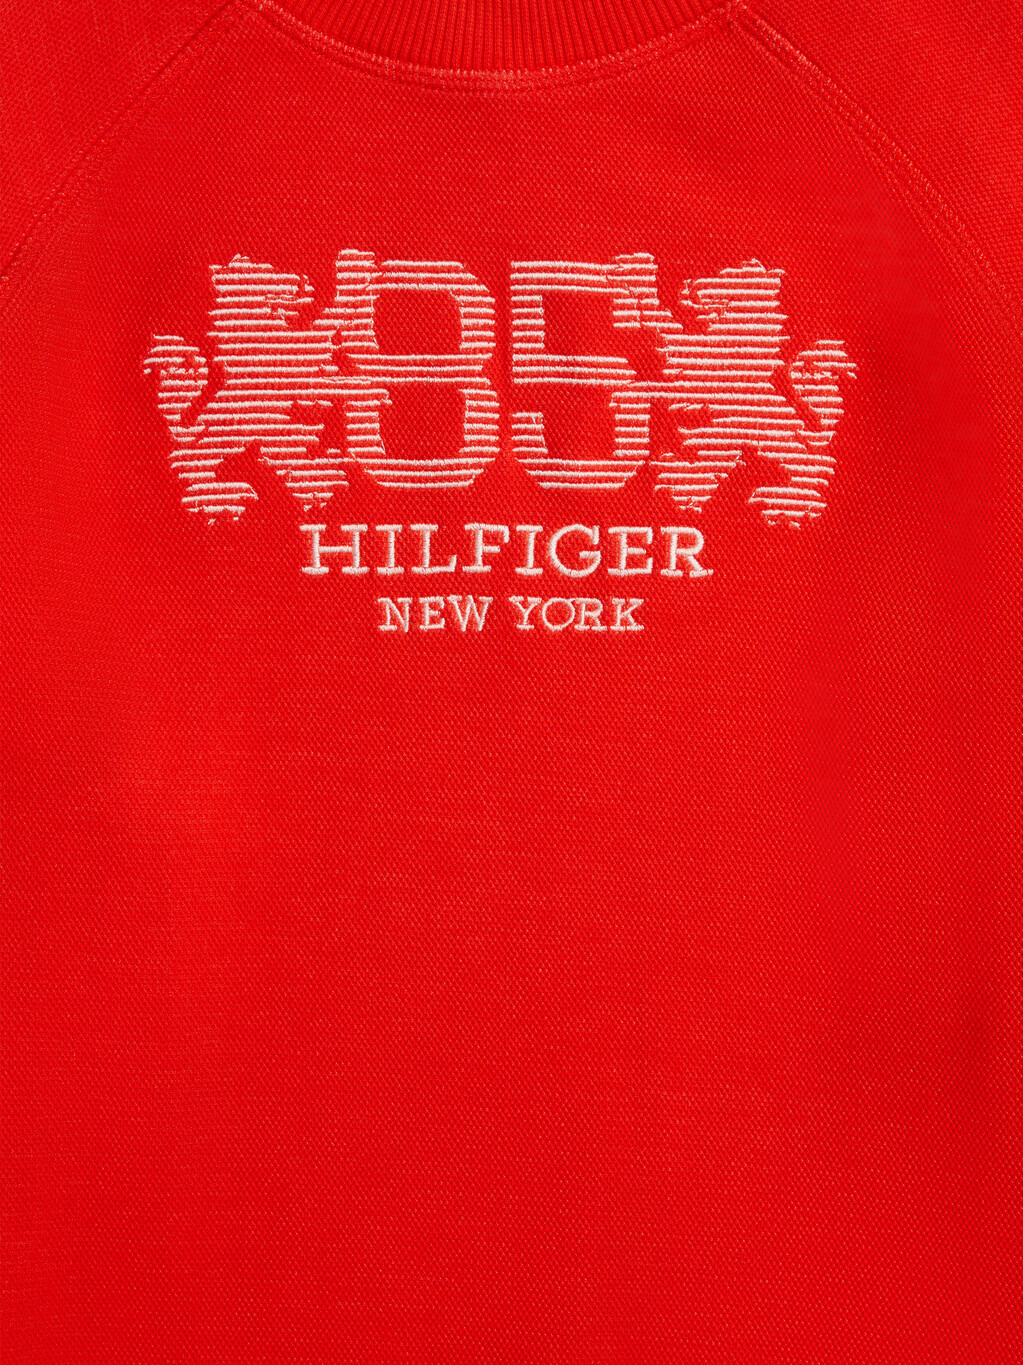 Boys Crest Embroidery Sweatshirt, Fierce Red, hi-res